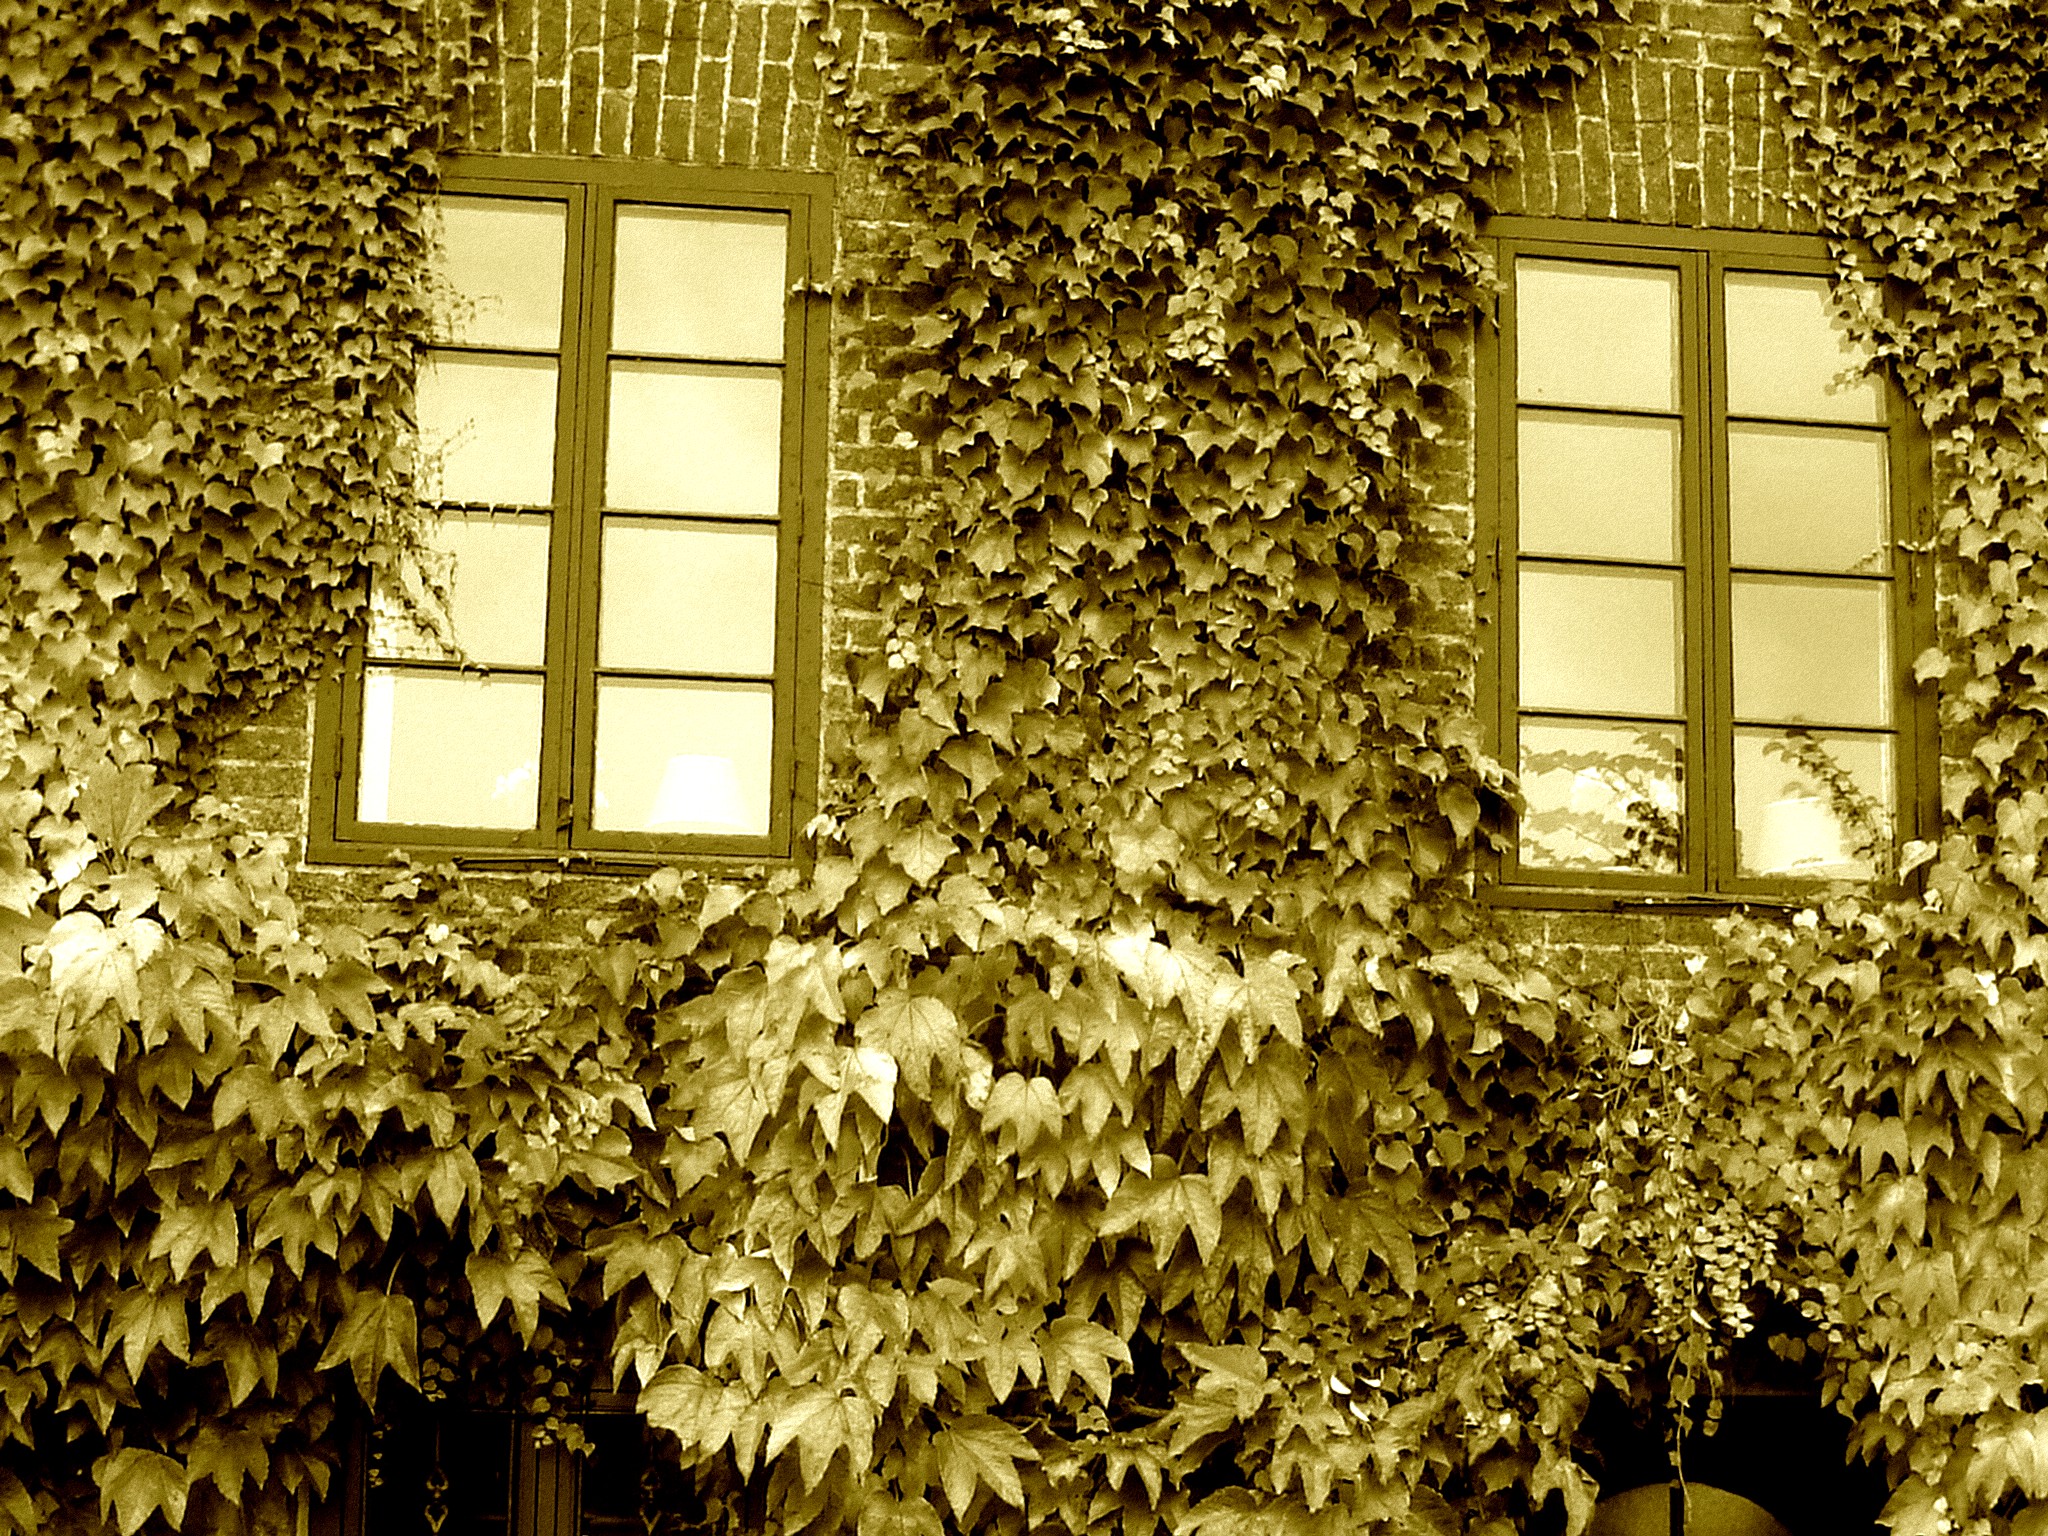 Maison  Skanegarden house - Båstad / Suède - Sweden.  21-10-2008  -  Version sépiatisée